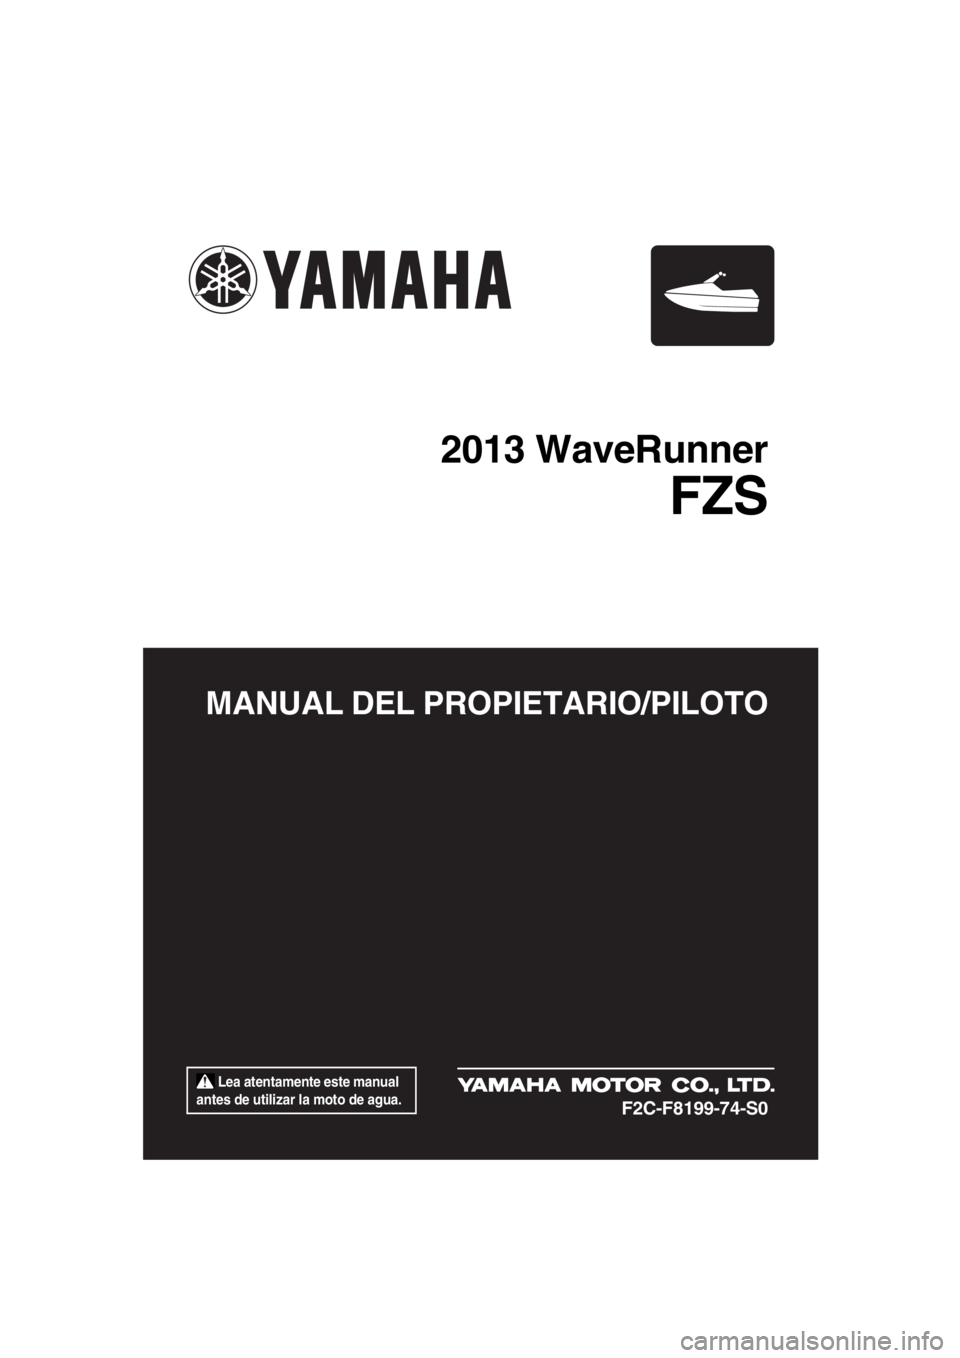 YAMAHA FZS SVHO 2013  Manuale de Empleo (in Spanish)  Lea atentamente este manual 
antes de utilizar la moto de agua.
MANUAL DEL PROPIETARIO/PILOTO
2013 WaveRunner
FZS
F2C-F8199-74-S0
UF2C74S0.book  Page 1  Tuesday, July 31, 2012  9:27 AM 